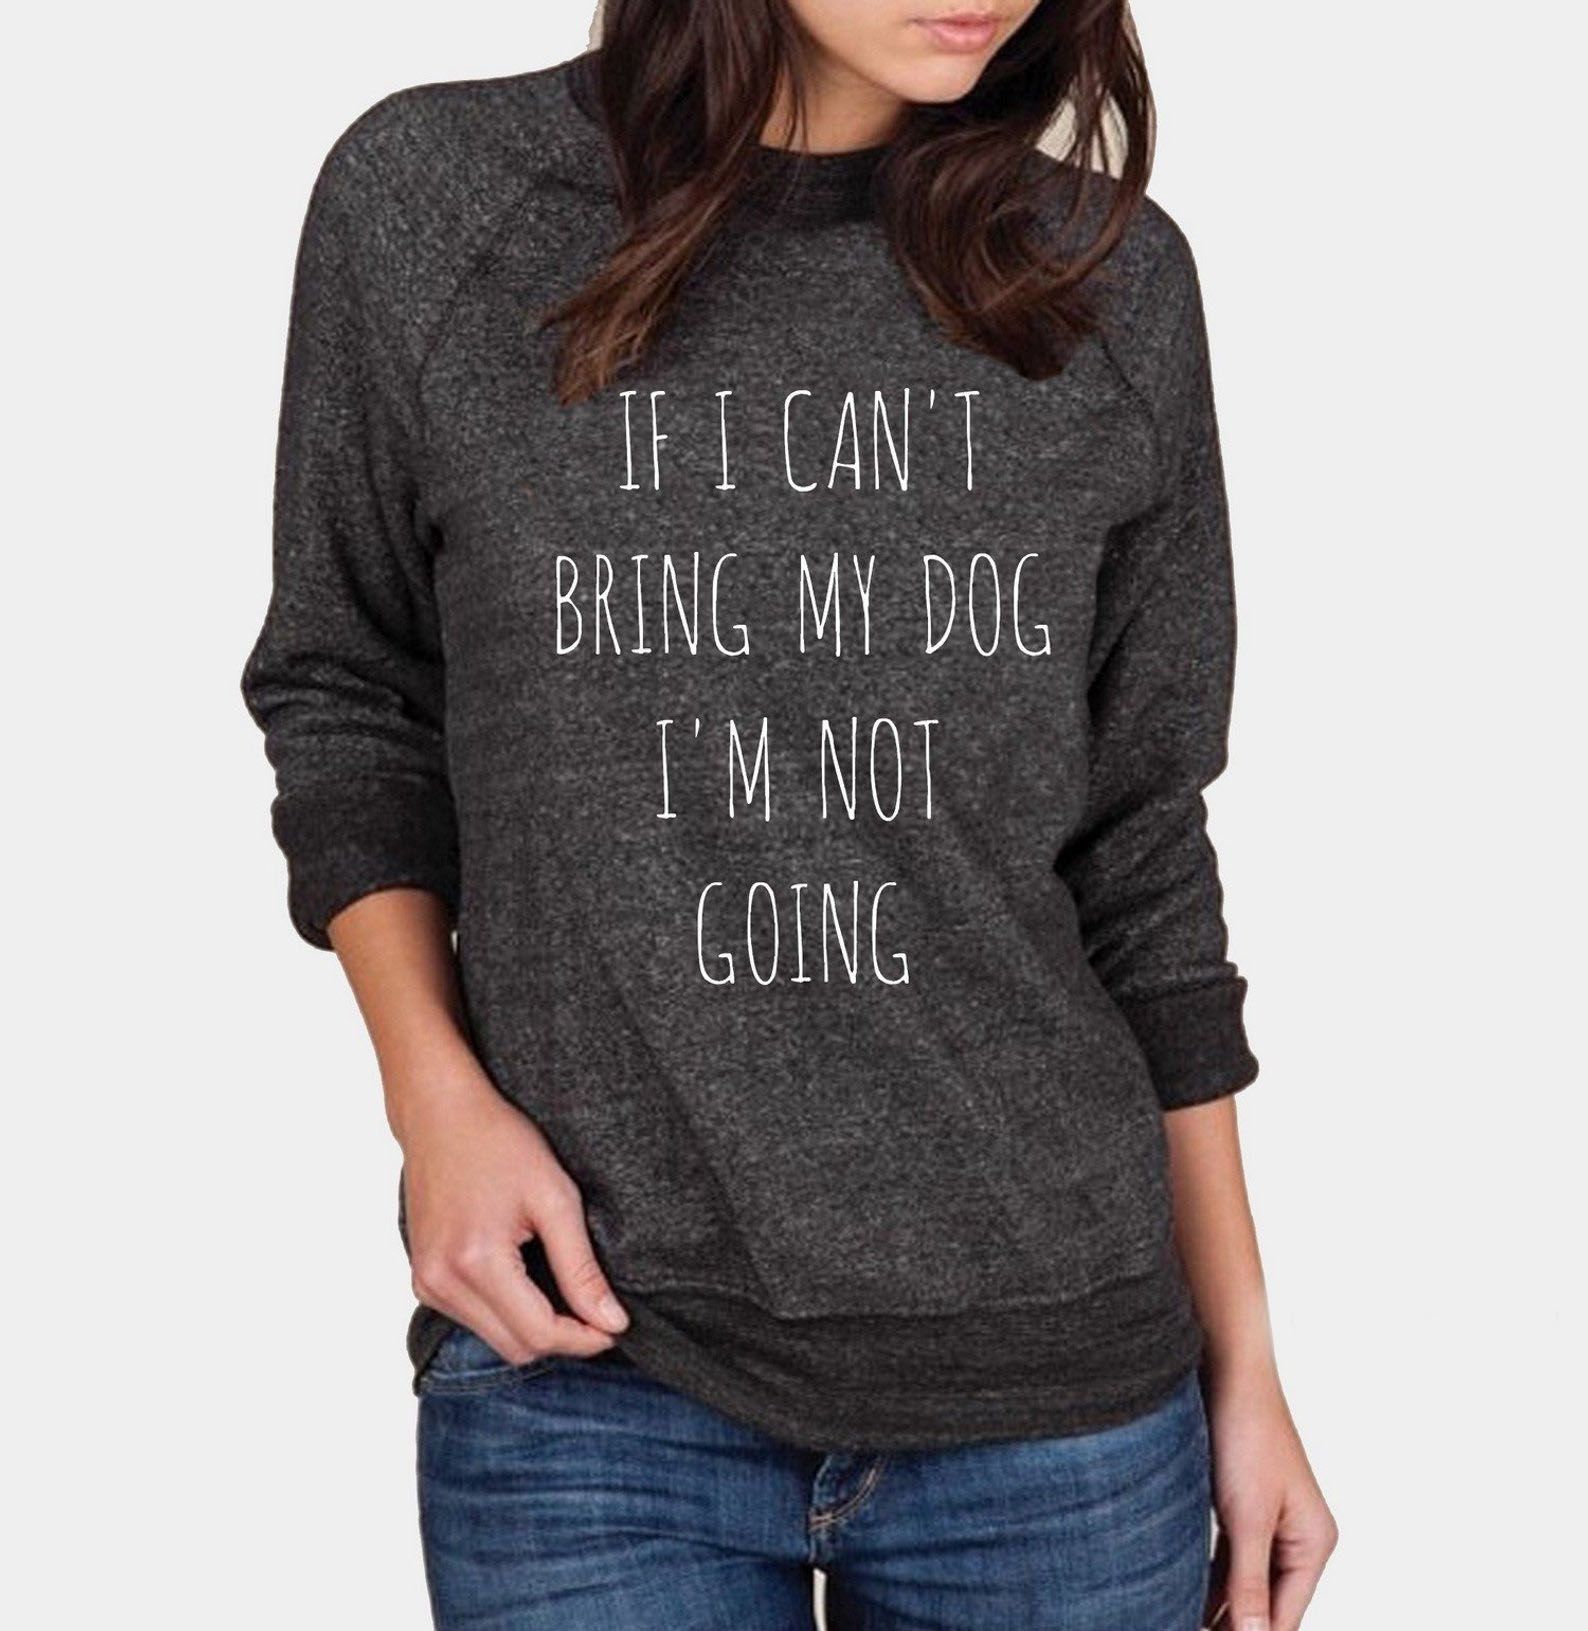 Dog Shirt For Women Dog T shirt Shirt for Dog Owners Dog Shirt For Men Gift for Dog Owner Funny Dog Shirt I Like My Dog More Than You